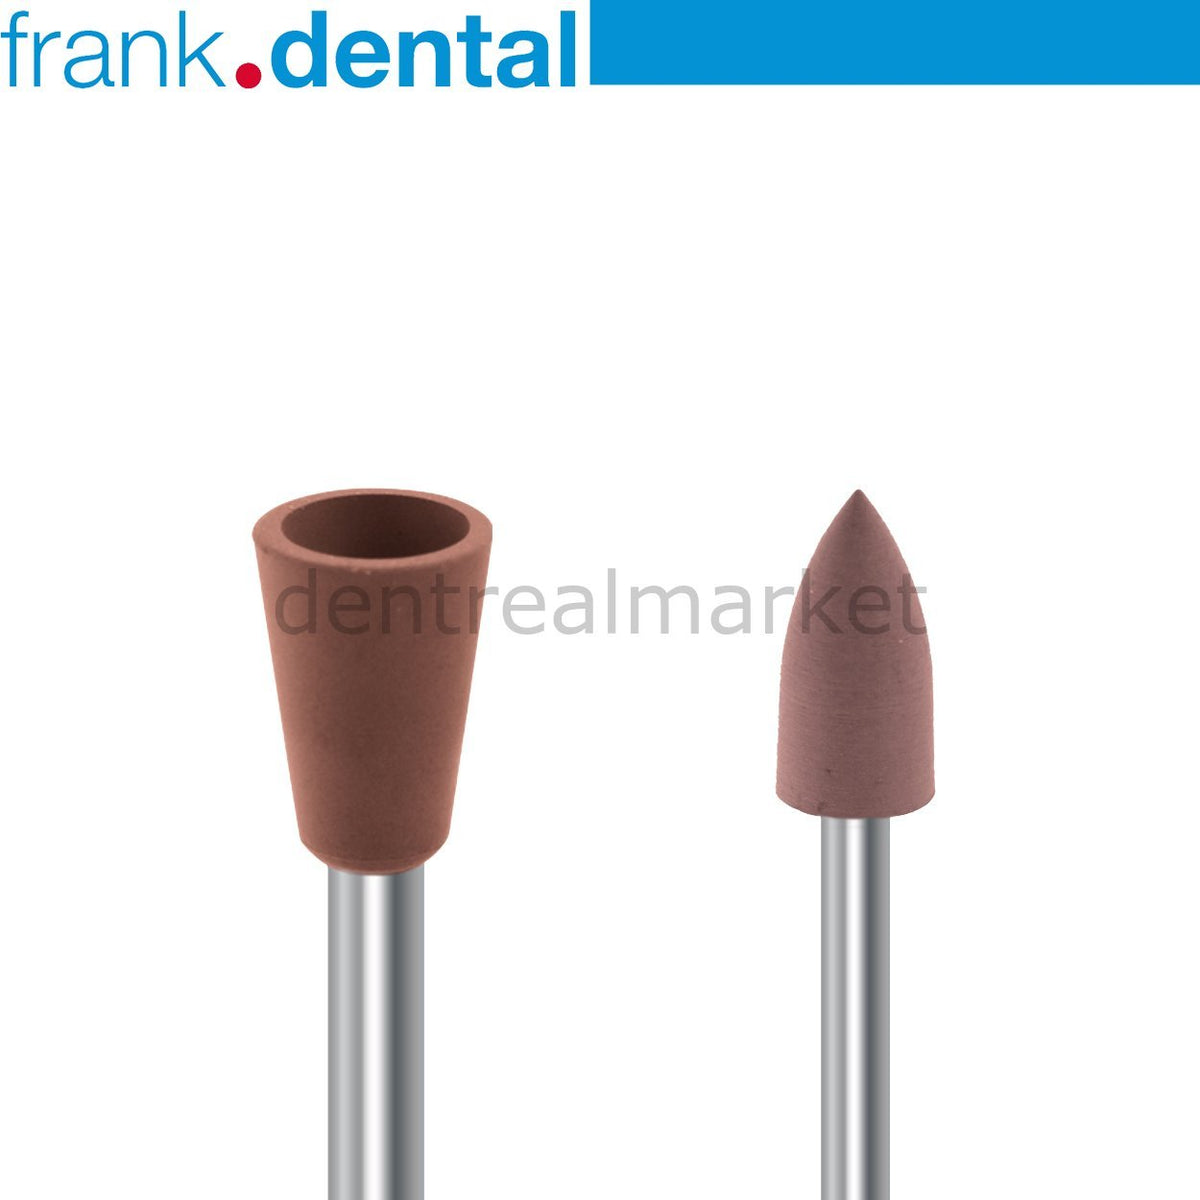 DentrealStore - Frank Dental Brown Amalgam Polishing Rubber - 10 Pcs